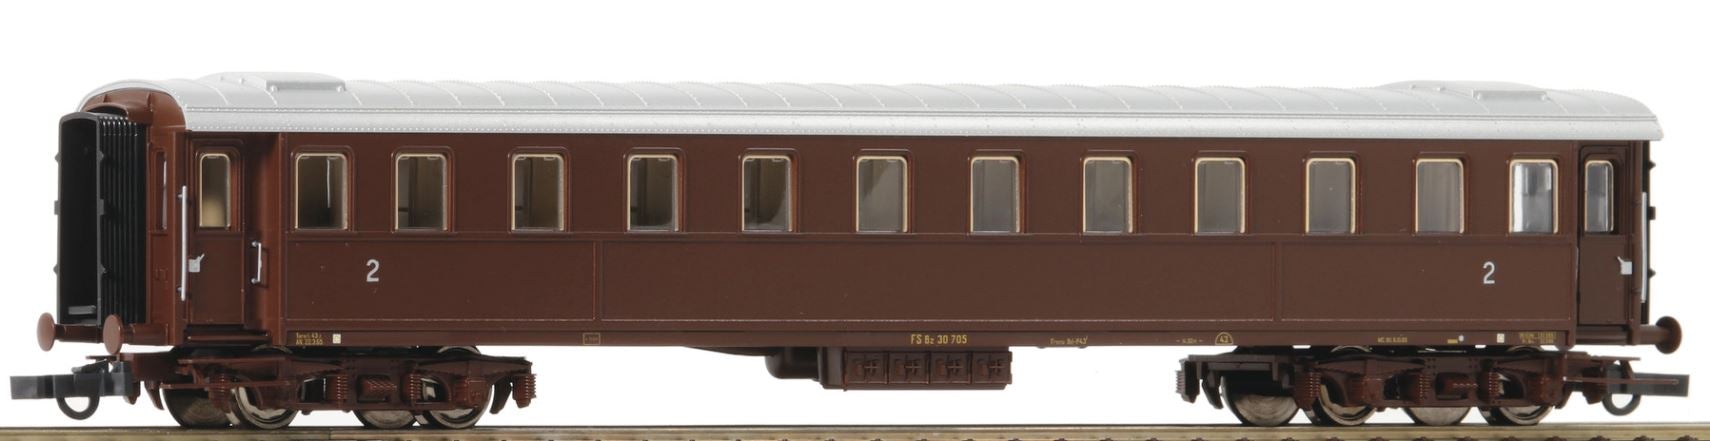 Roco 74383 H0 2nd Class Passenger Coach Series S30000, FS, Ep III